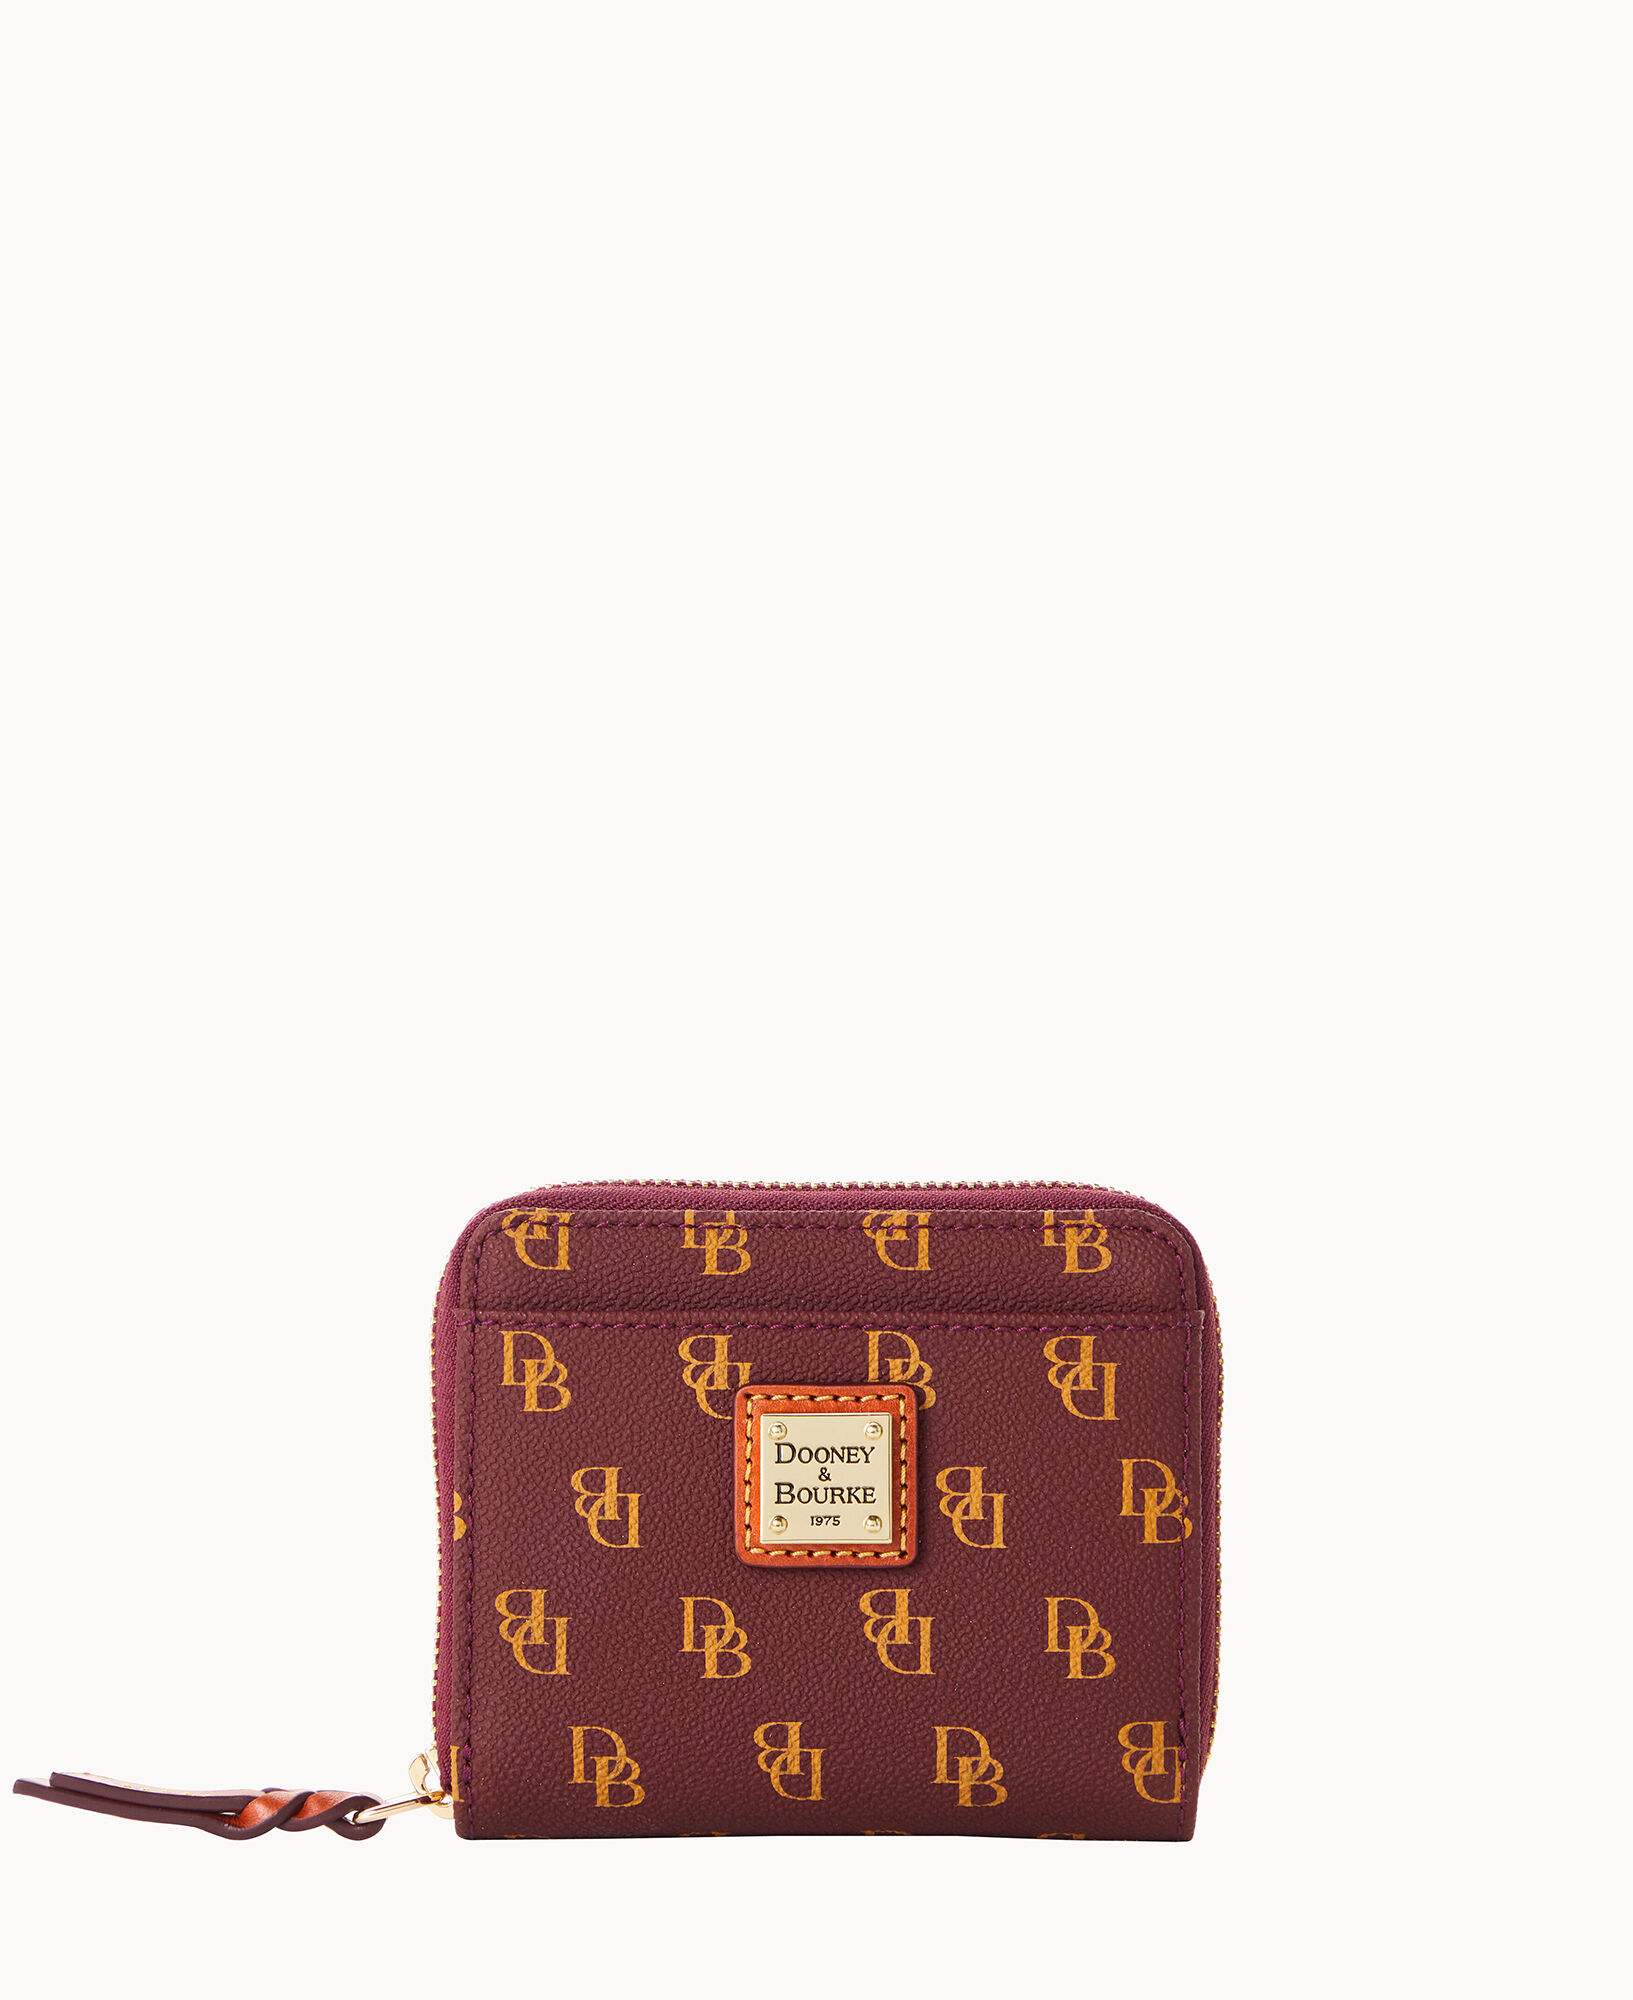 Louis Vuitton Handbag And Matching Wallet for Sale in Norfolk, VA